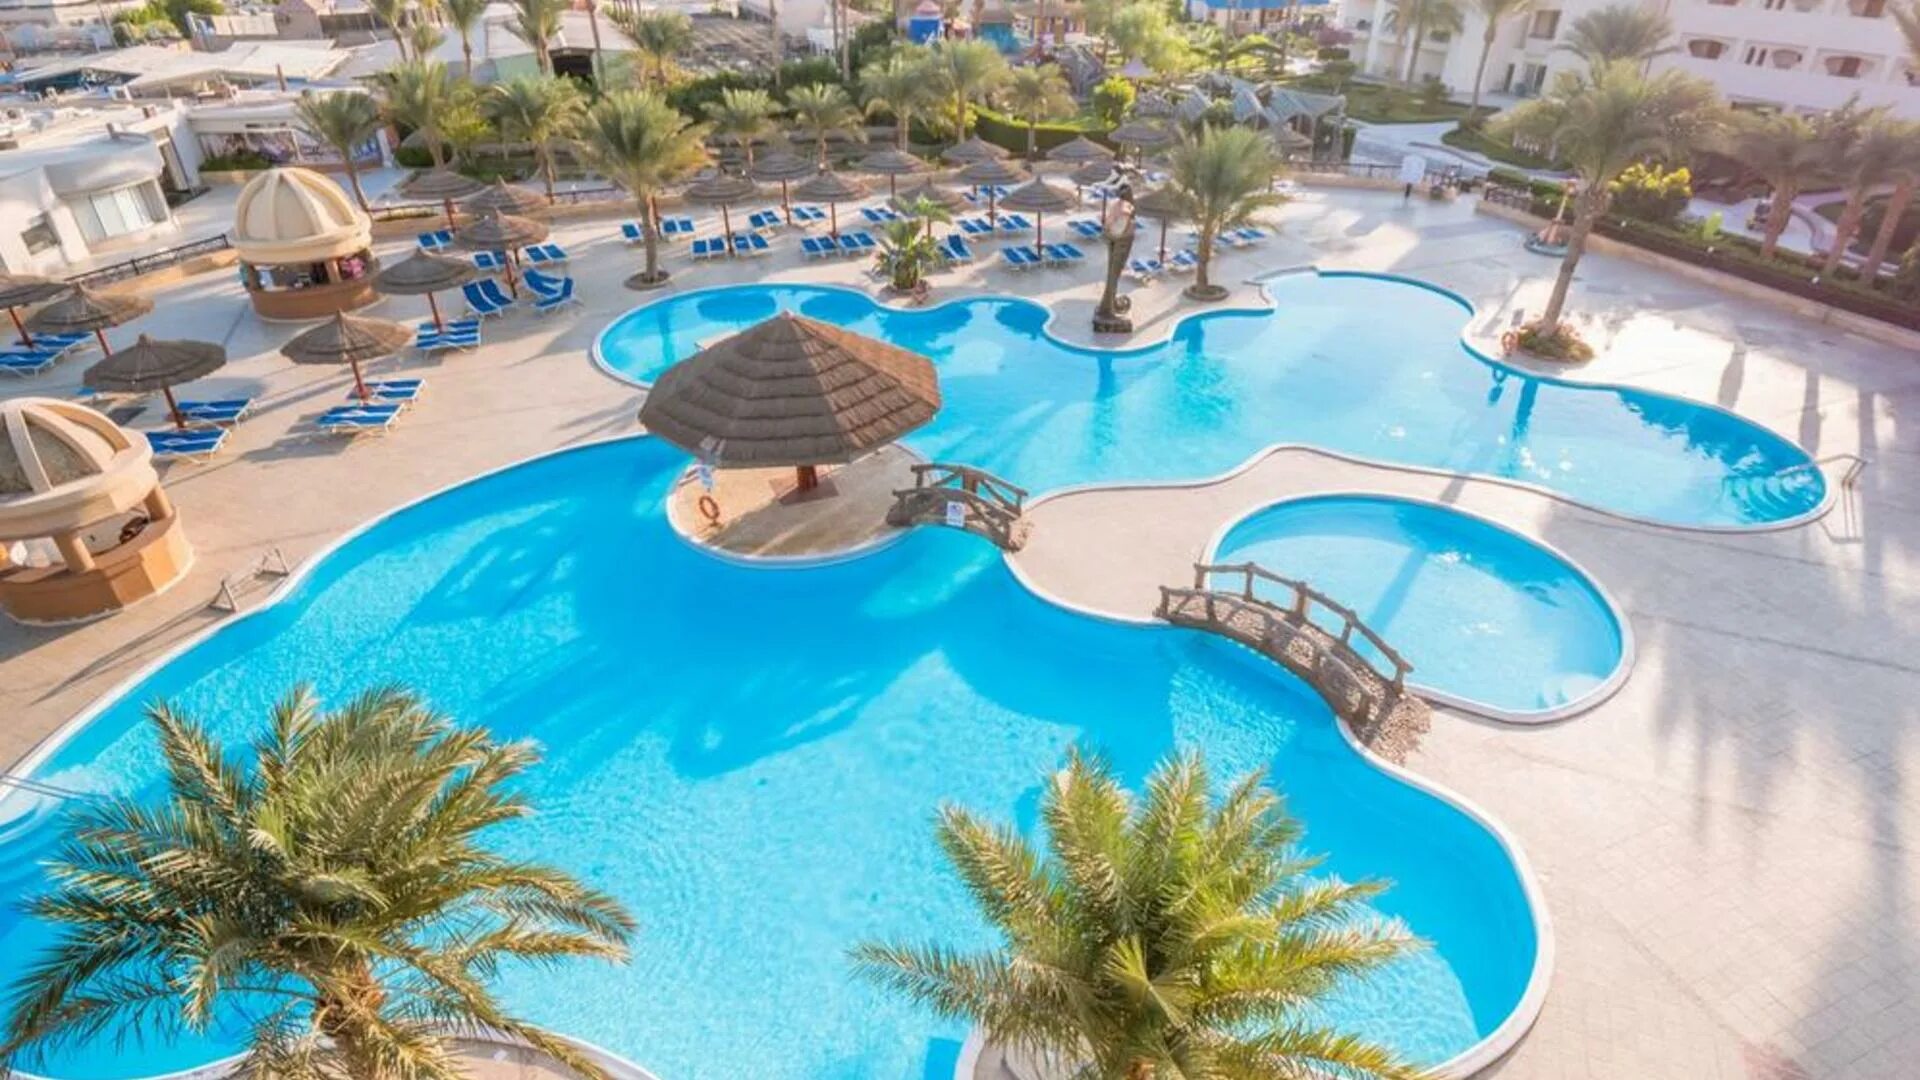 Сигал Бич Резорт 4 Хургада. Seagull Beach Resort 4 Египет. Seagull Beach Resort Club 4 Хургада. Сигал Египет Хургада.